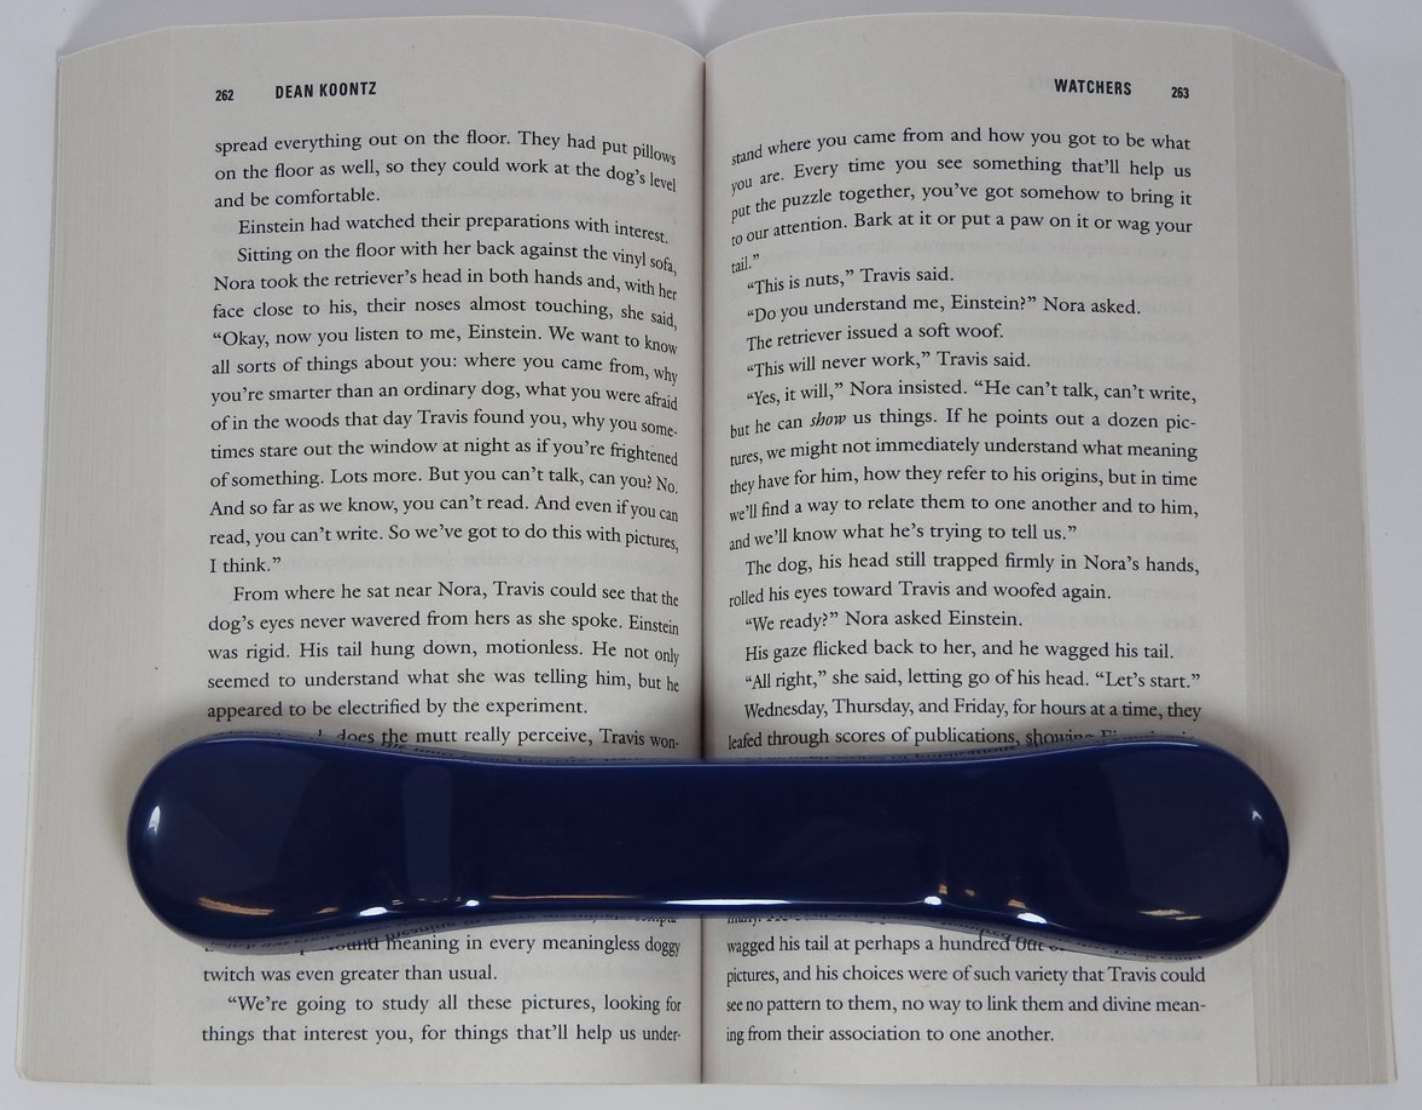 BookBone's The Original Weighted Rubber Bookmark